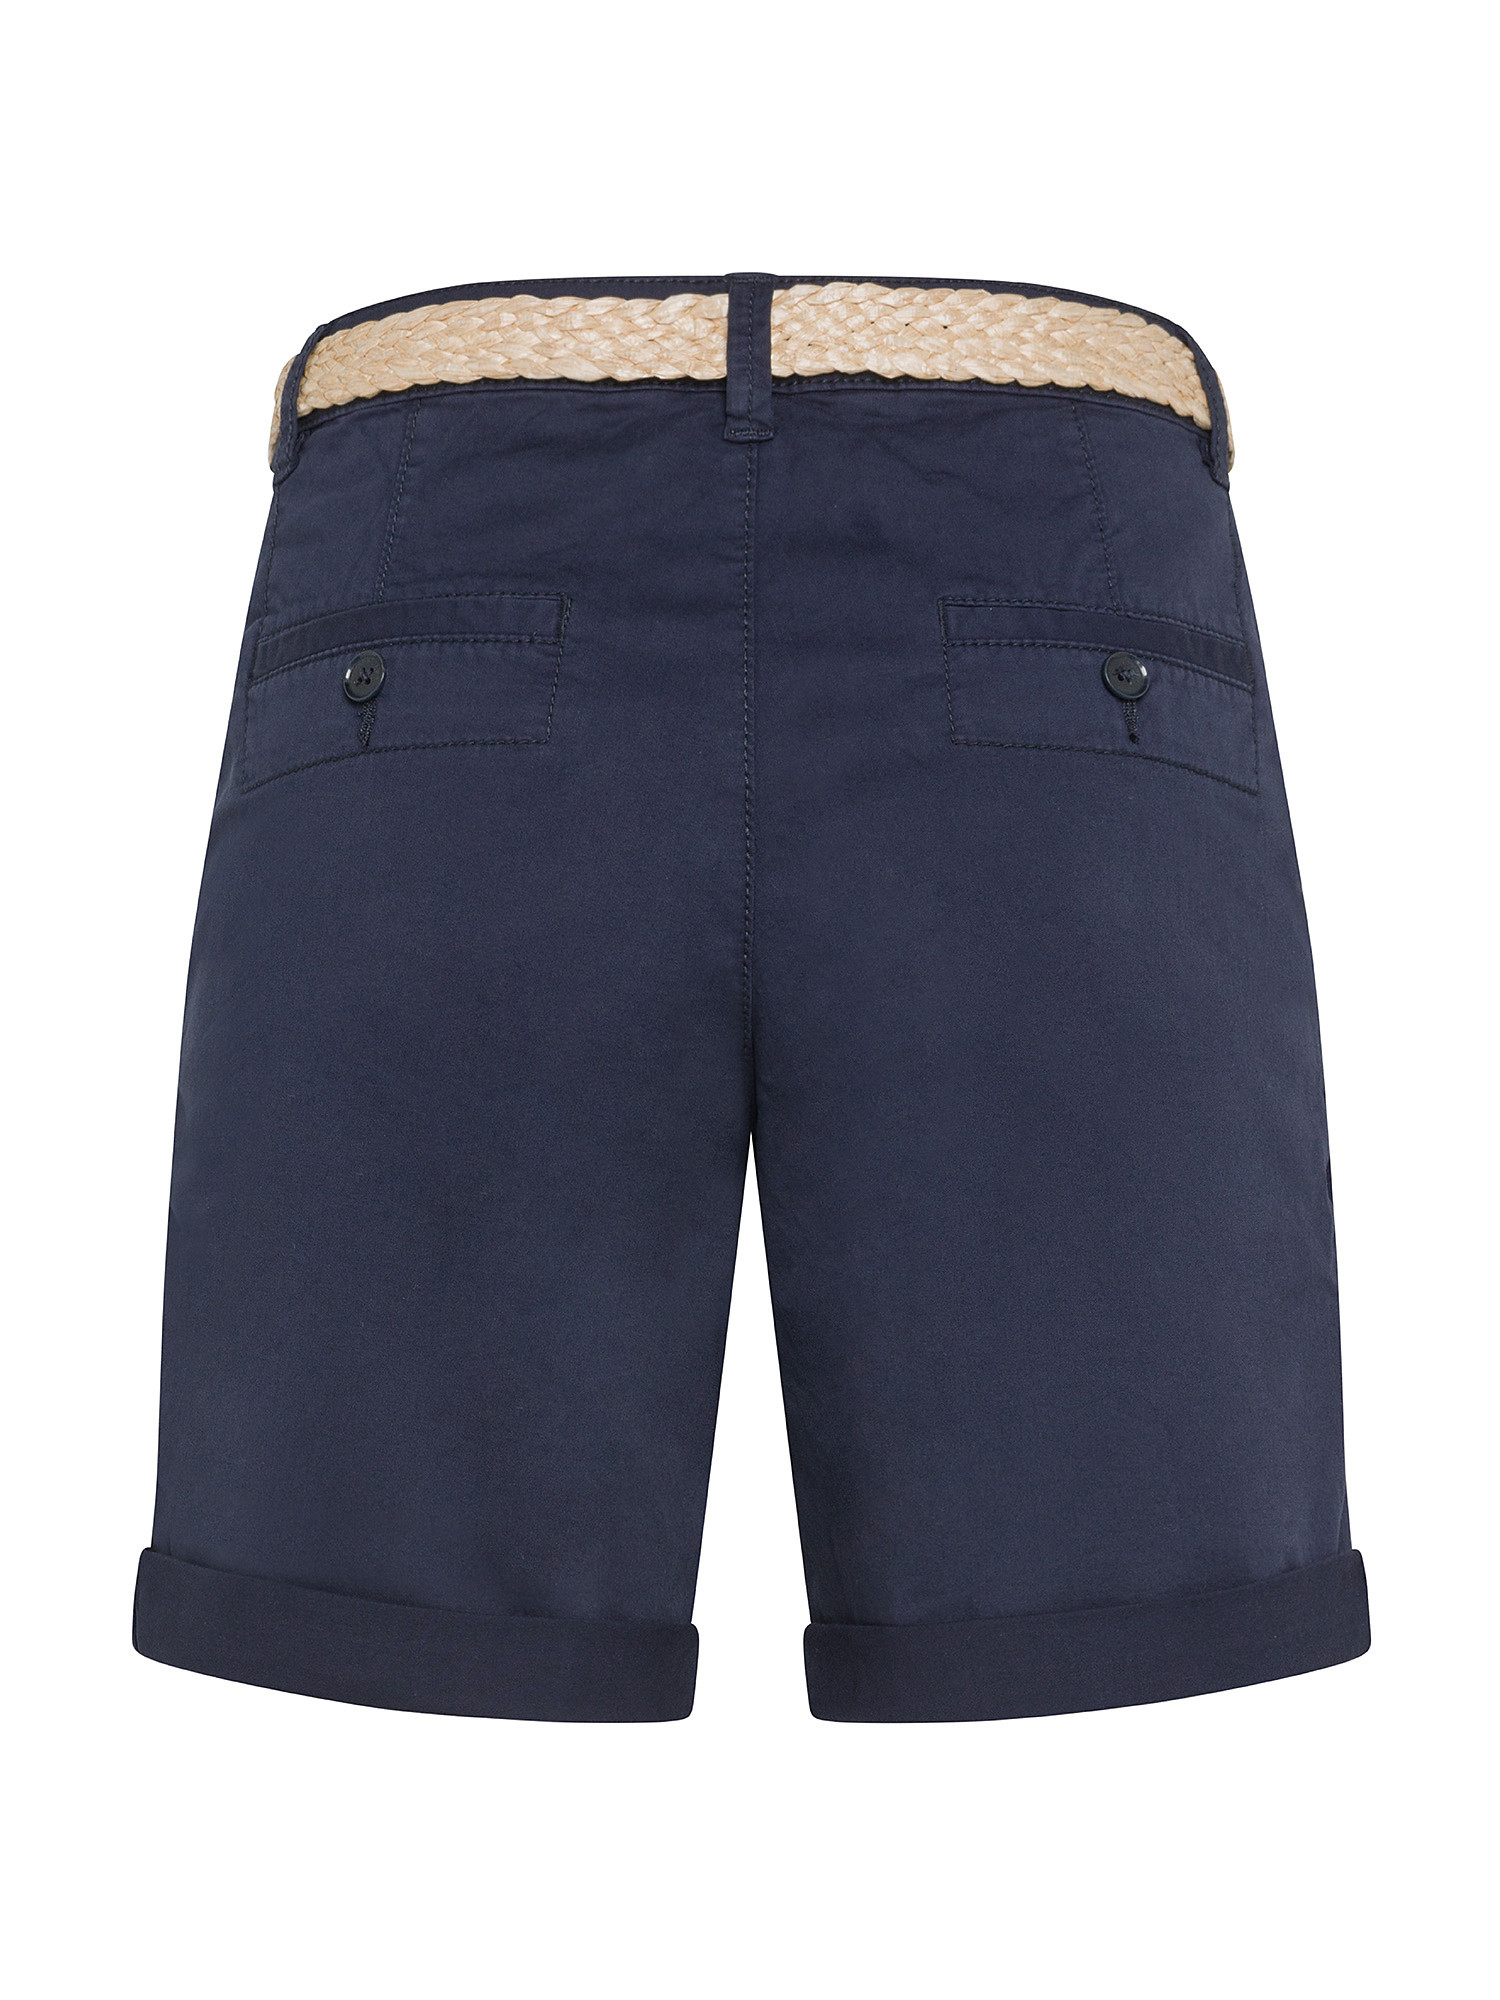 Esprit - Shorts con cintura intrecciata in rafia, Blu scuro, large image number 1